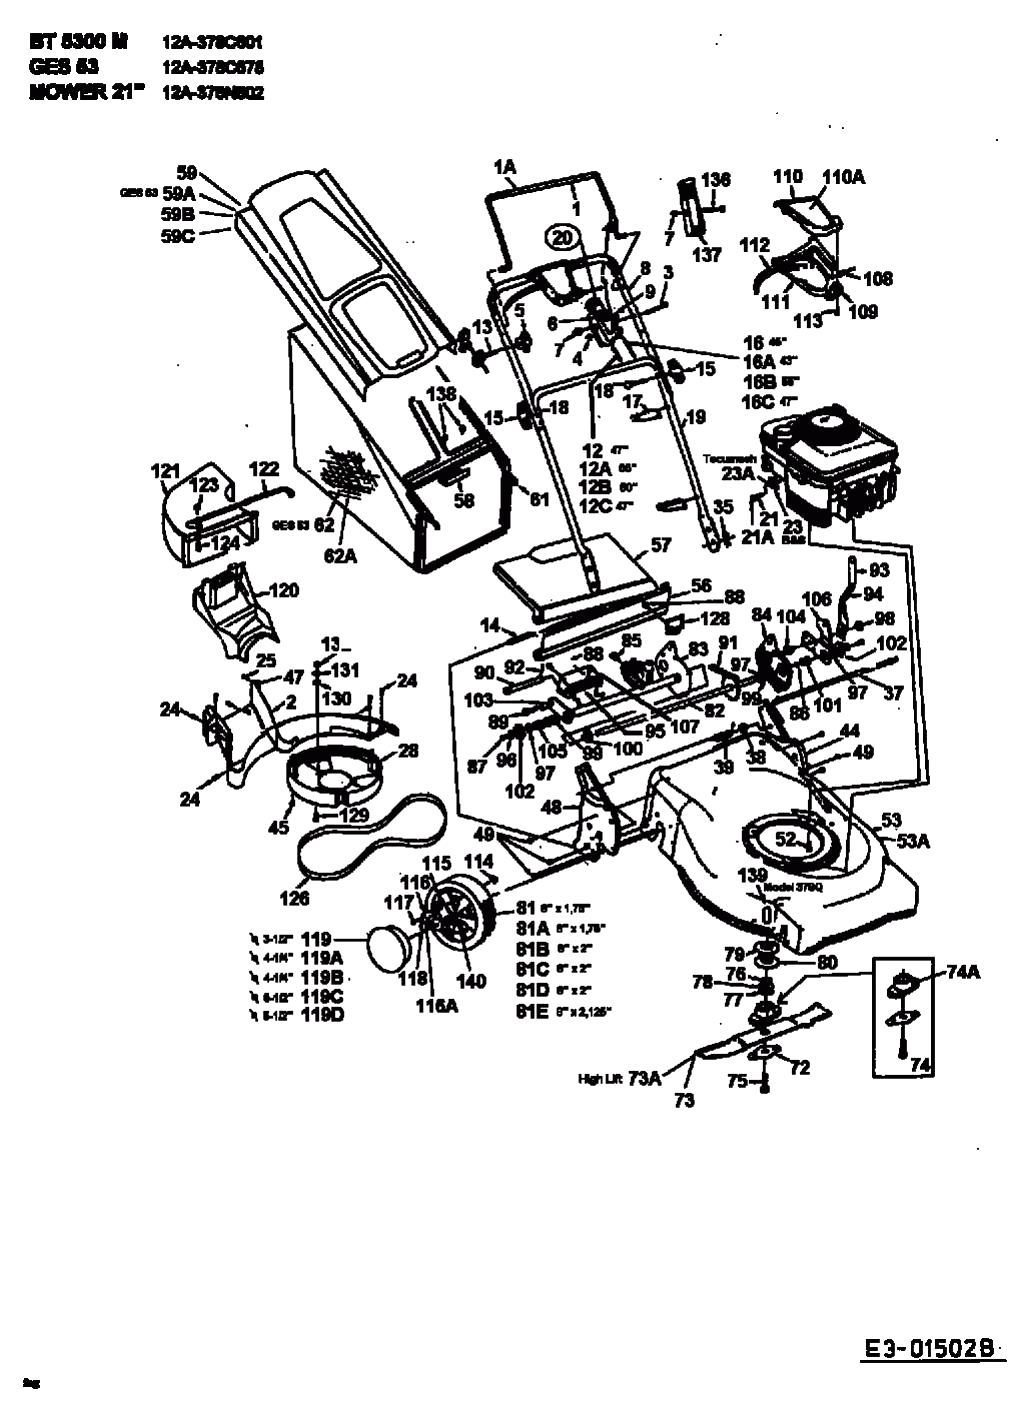 MTD Артикул 12A-378N602 (год выпуска 2001). Основная деталировка